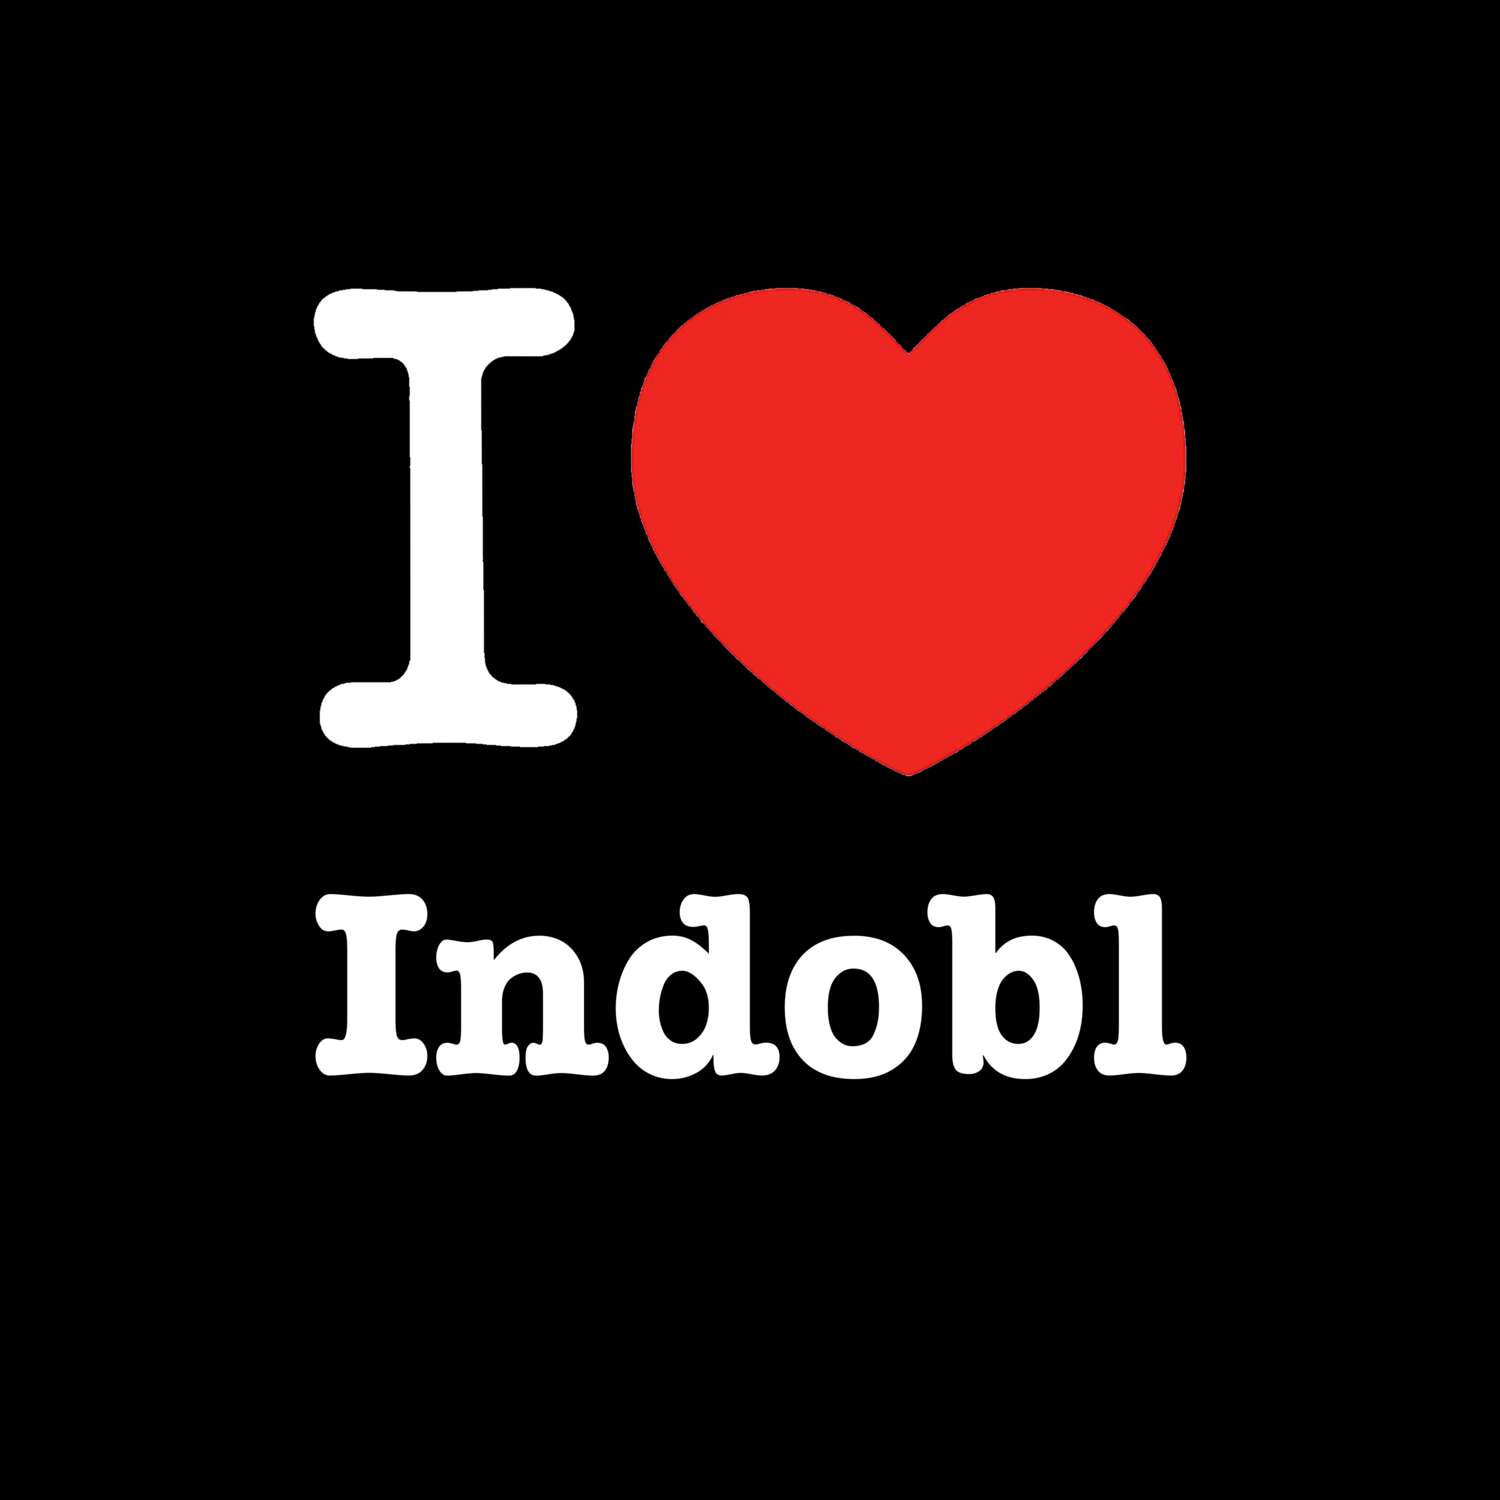 Indobl T-Shirt »I love«